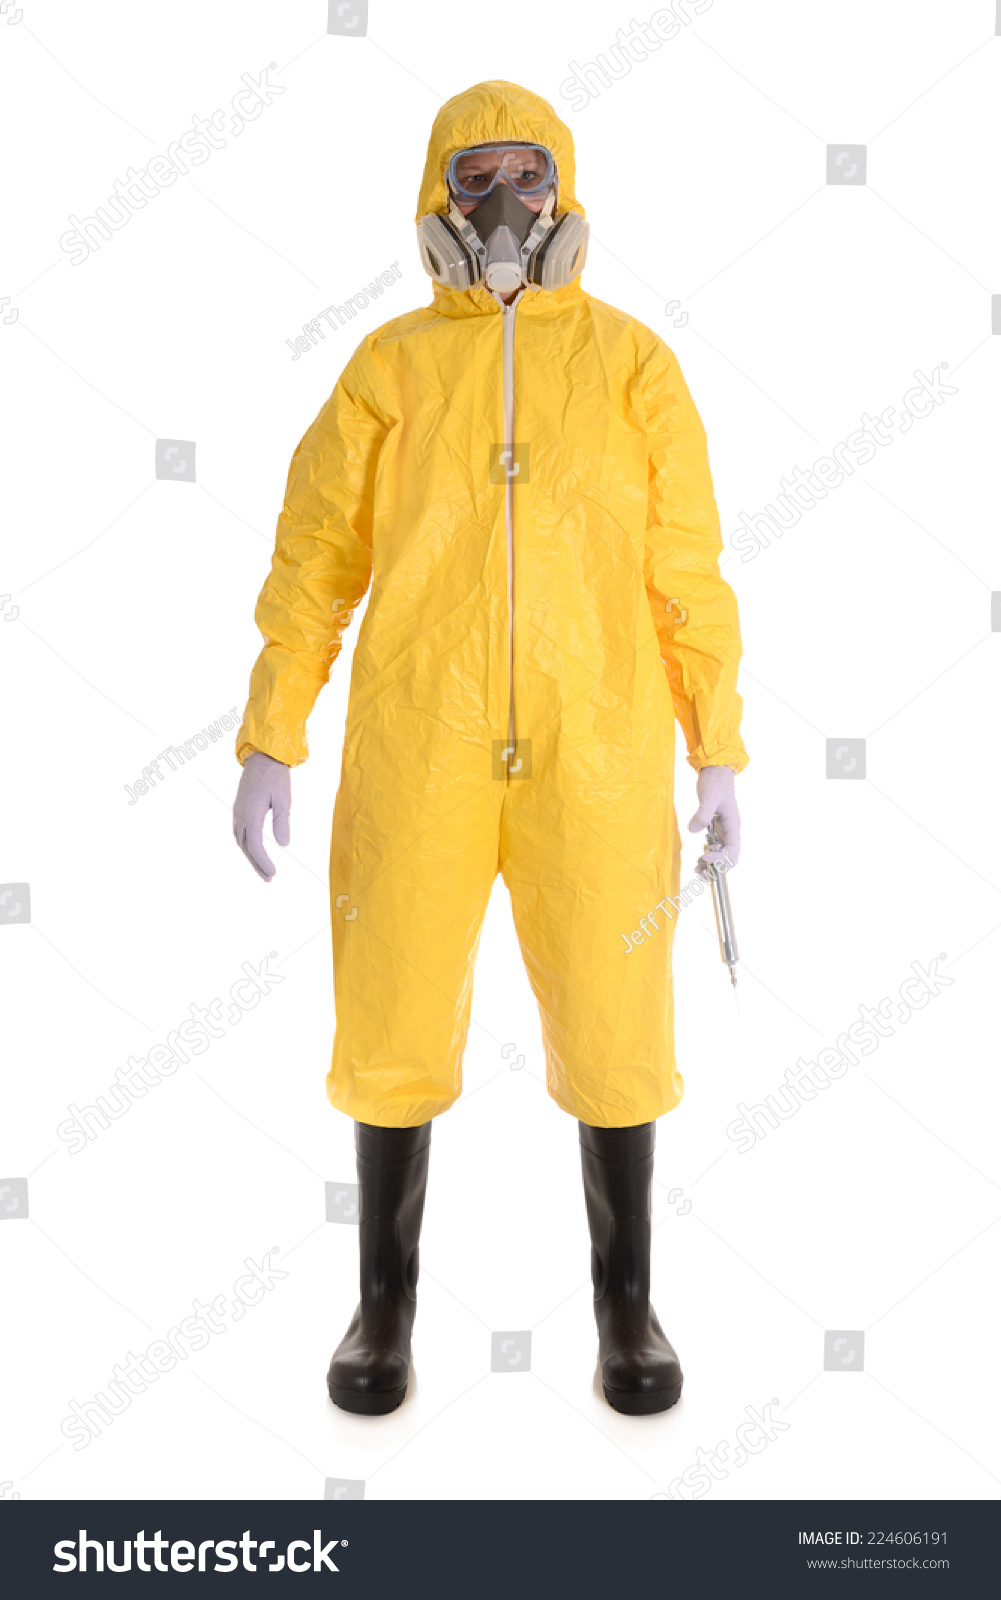 Biohazard Suit Large Syringe Stock Photo 224606191 - Shutterstock